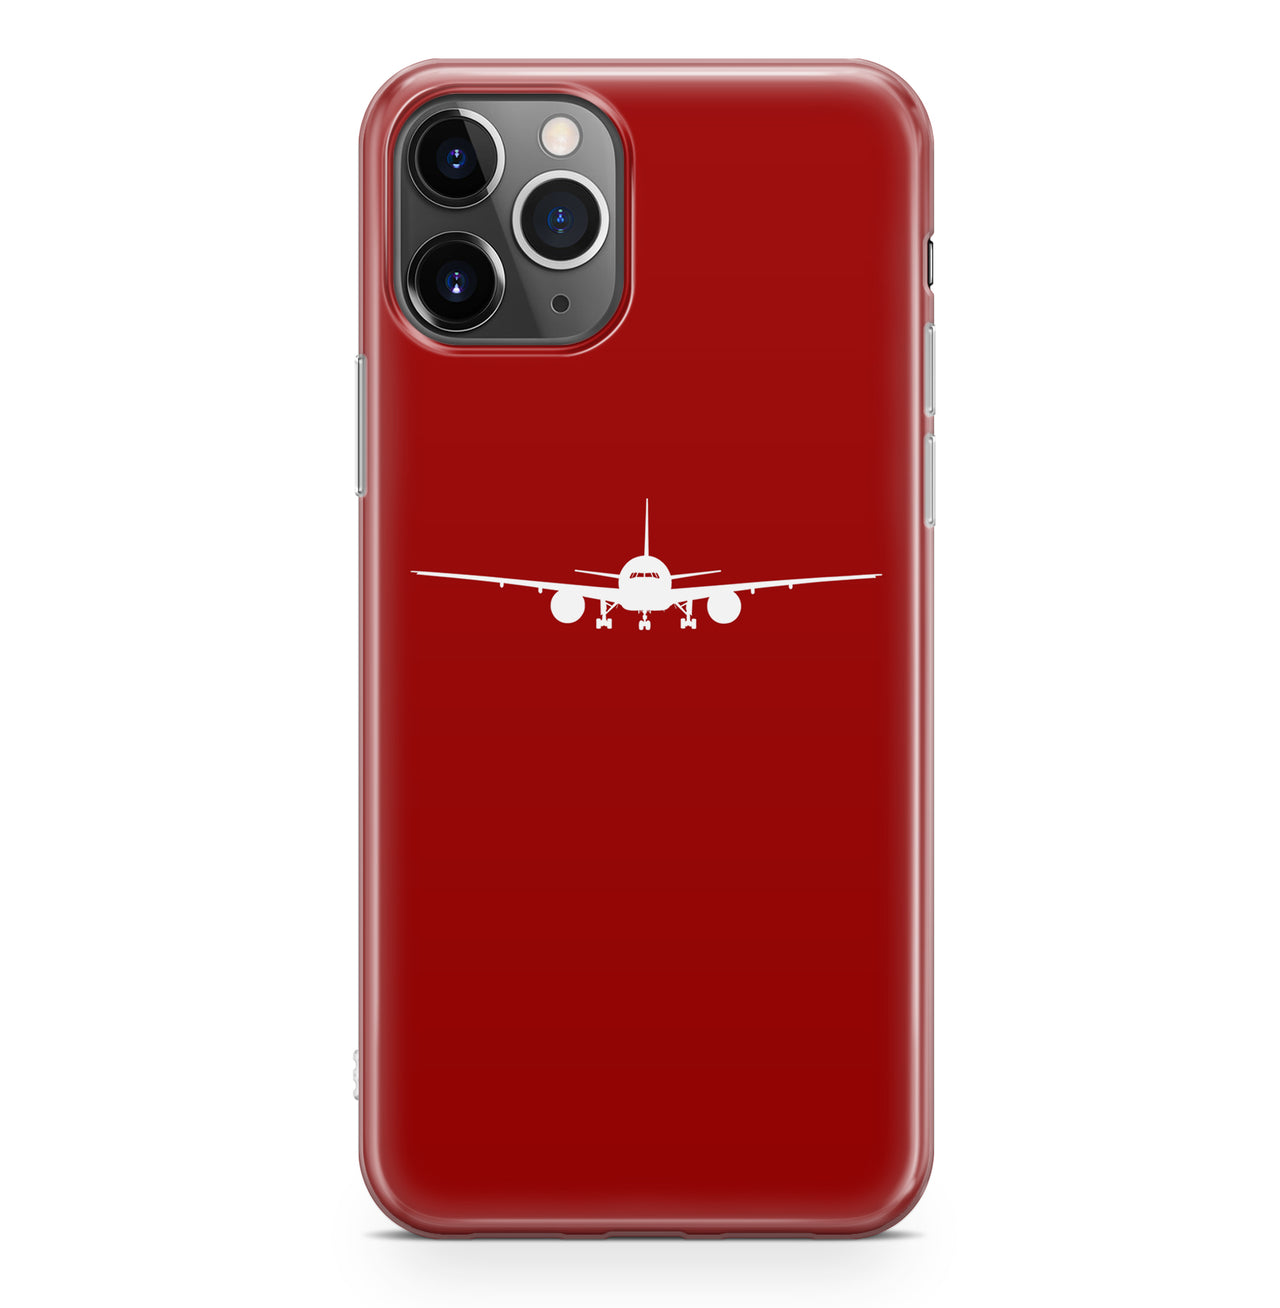 Boeing 777 Silhouette Designed iPhone Cases